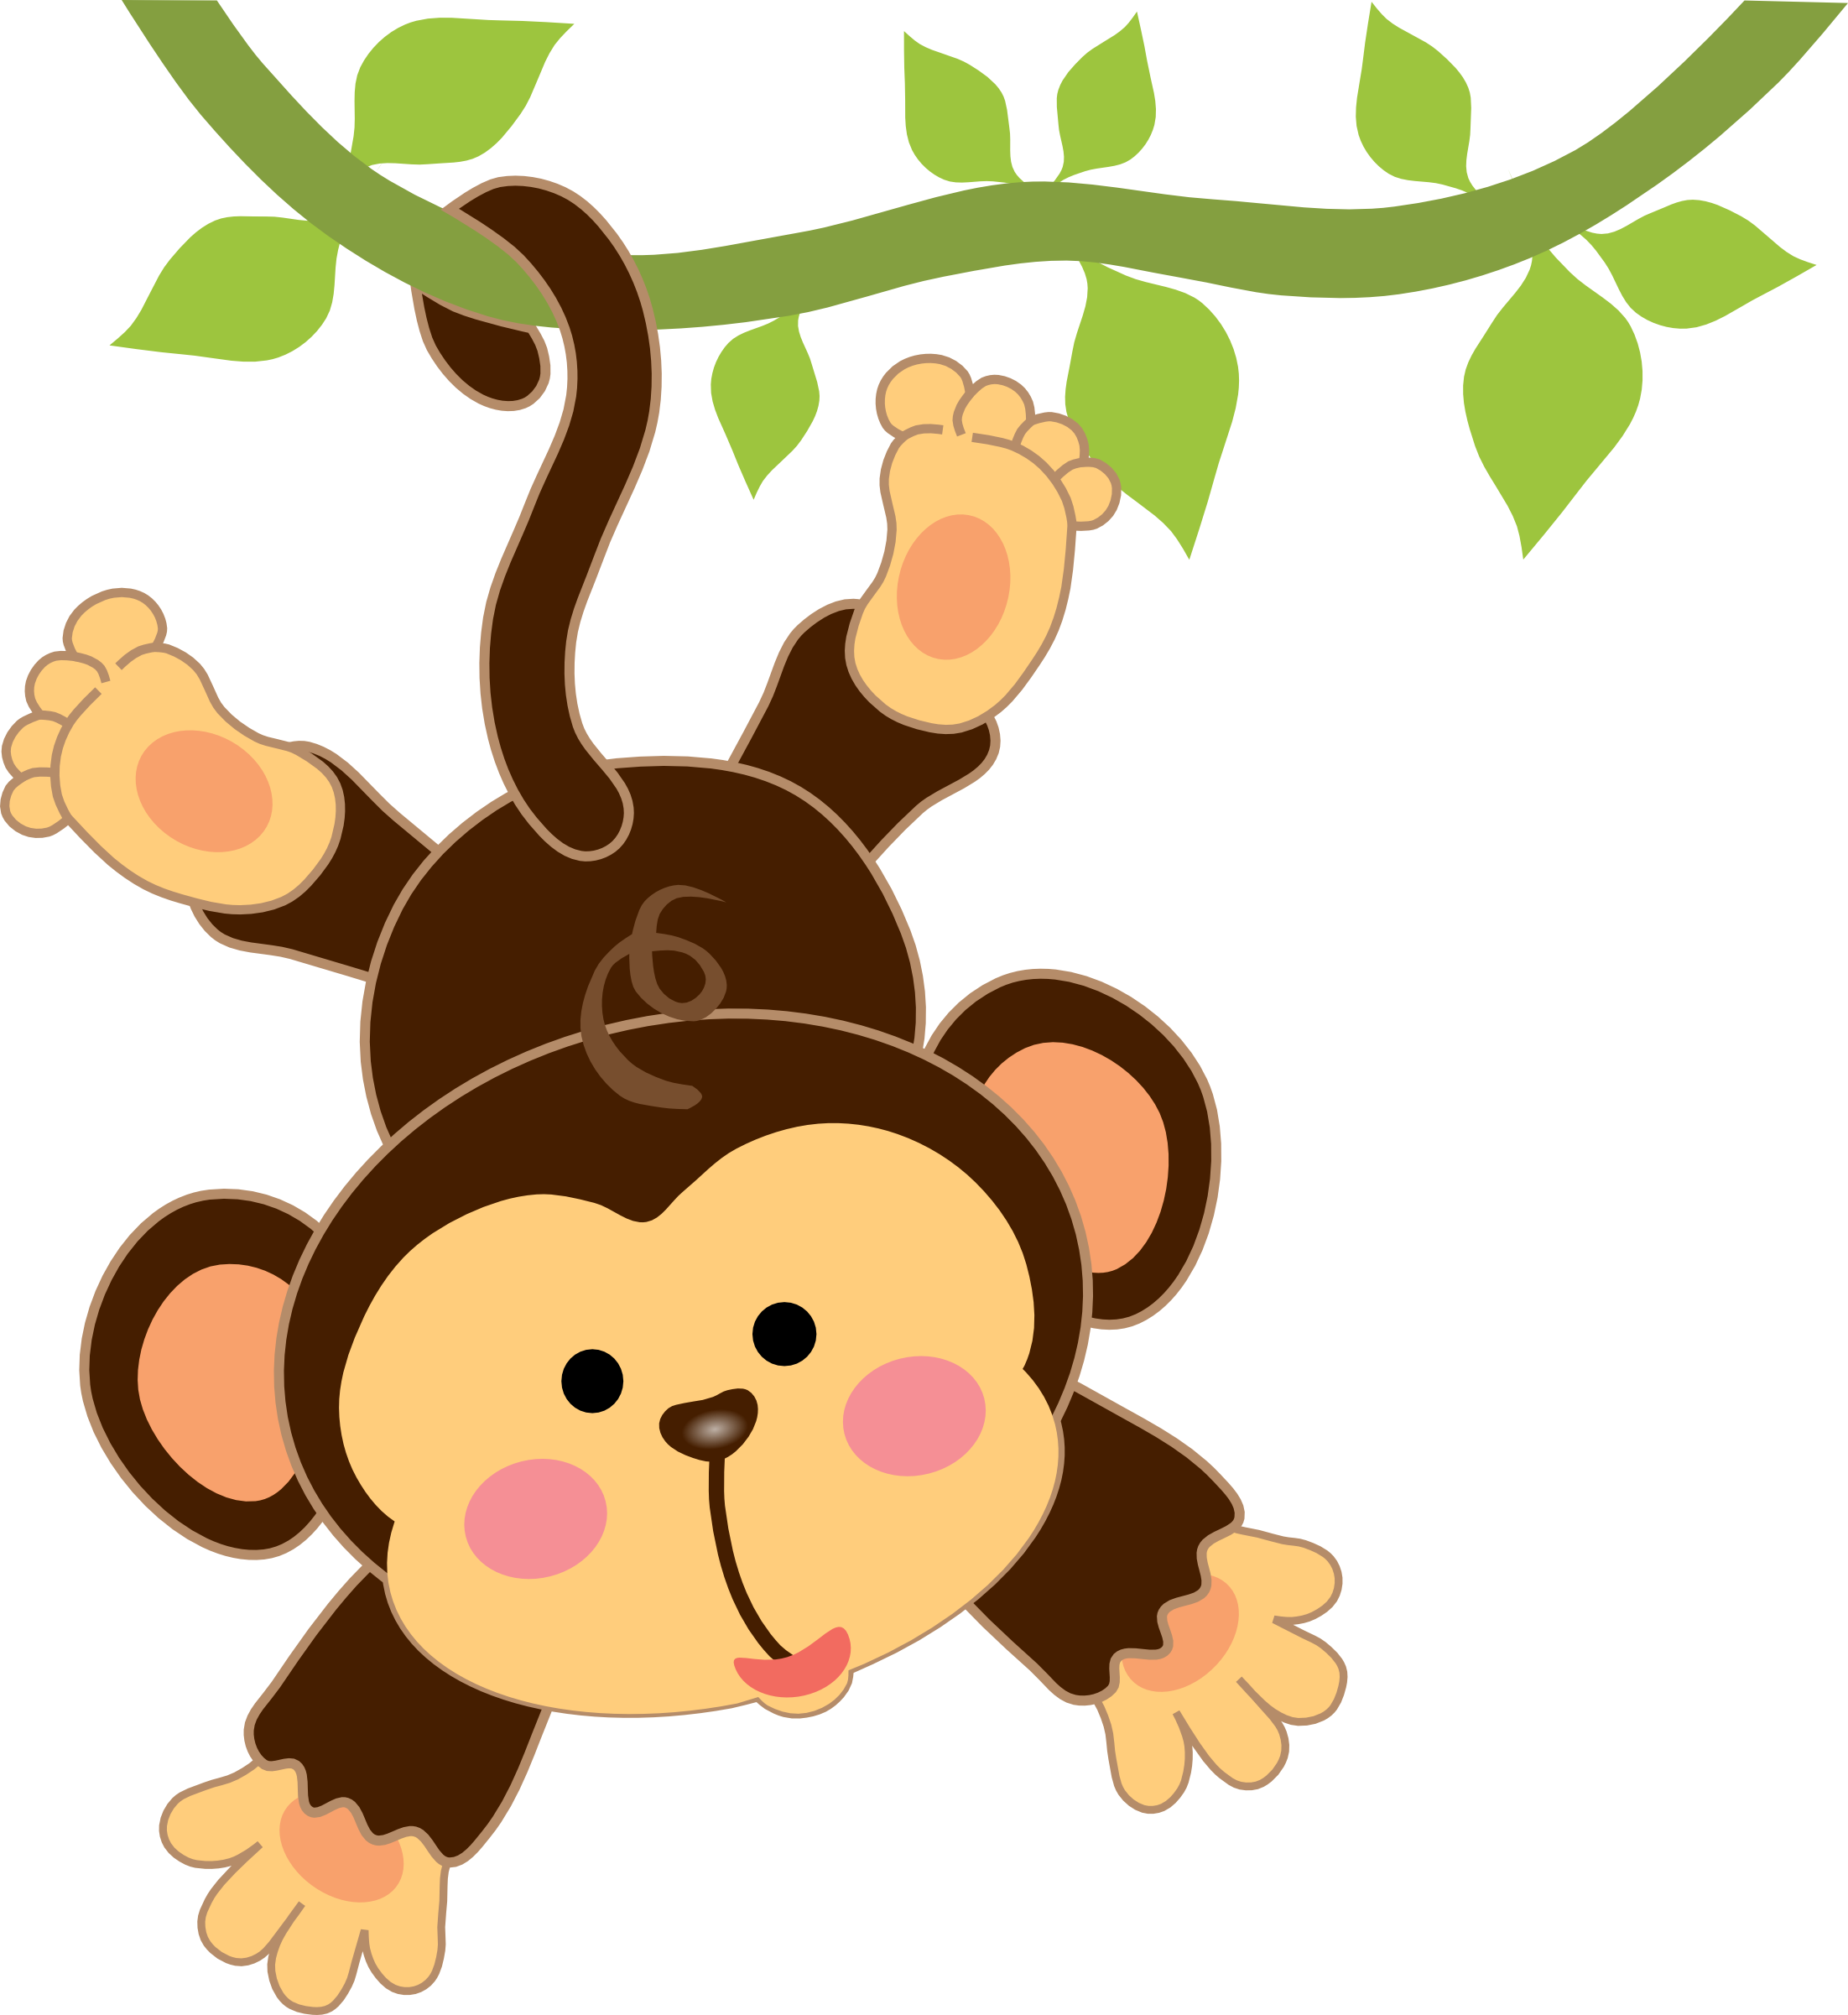 Monkey clipart jpeg, Monkey jpeg Transparent FREE for